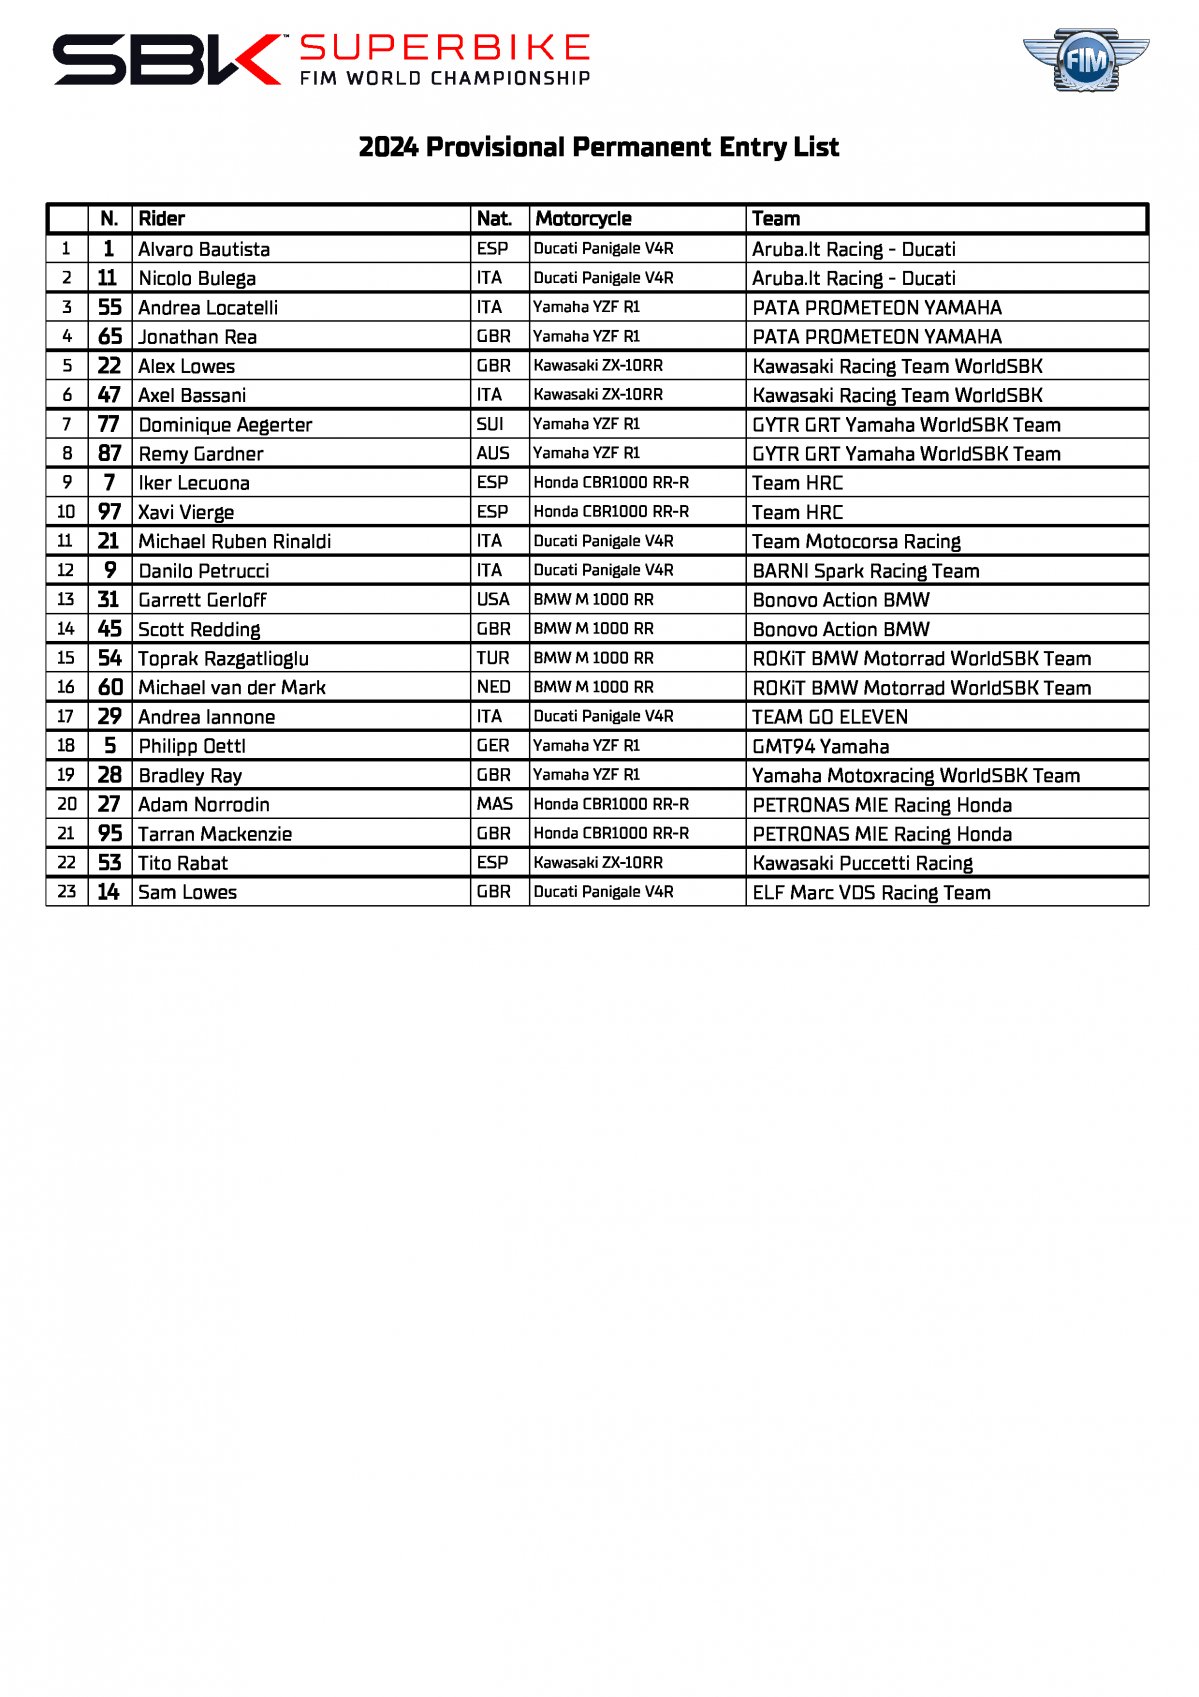 Списки участников World Superbike 2024